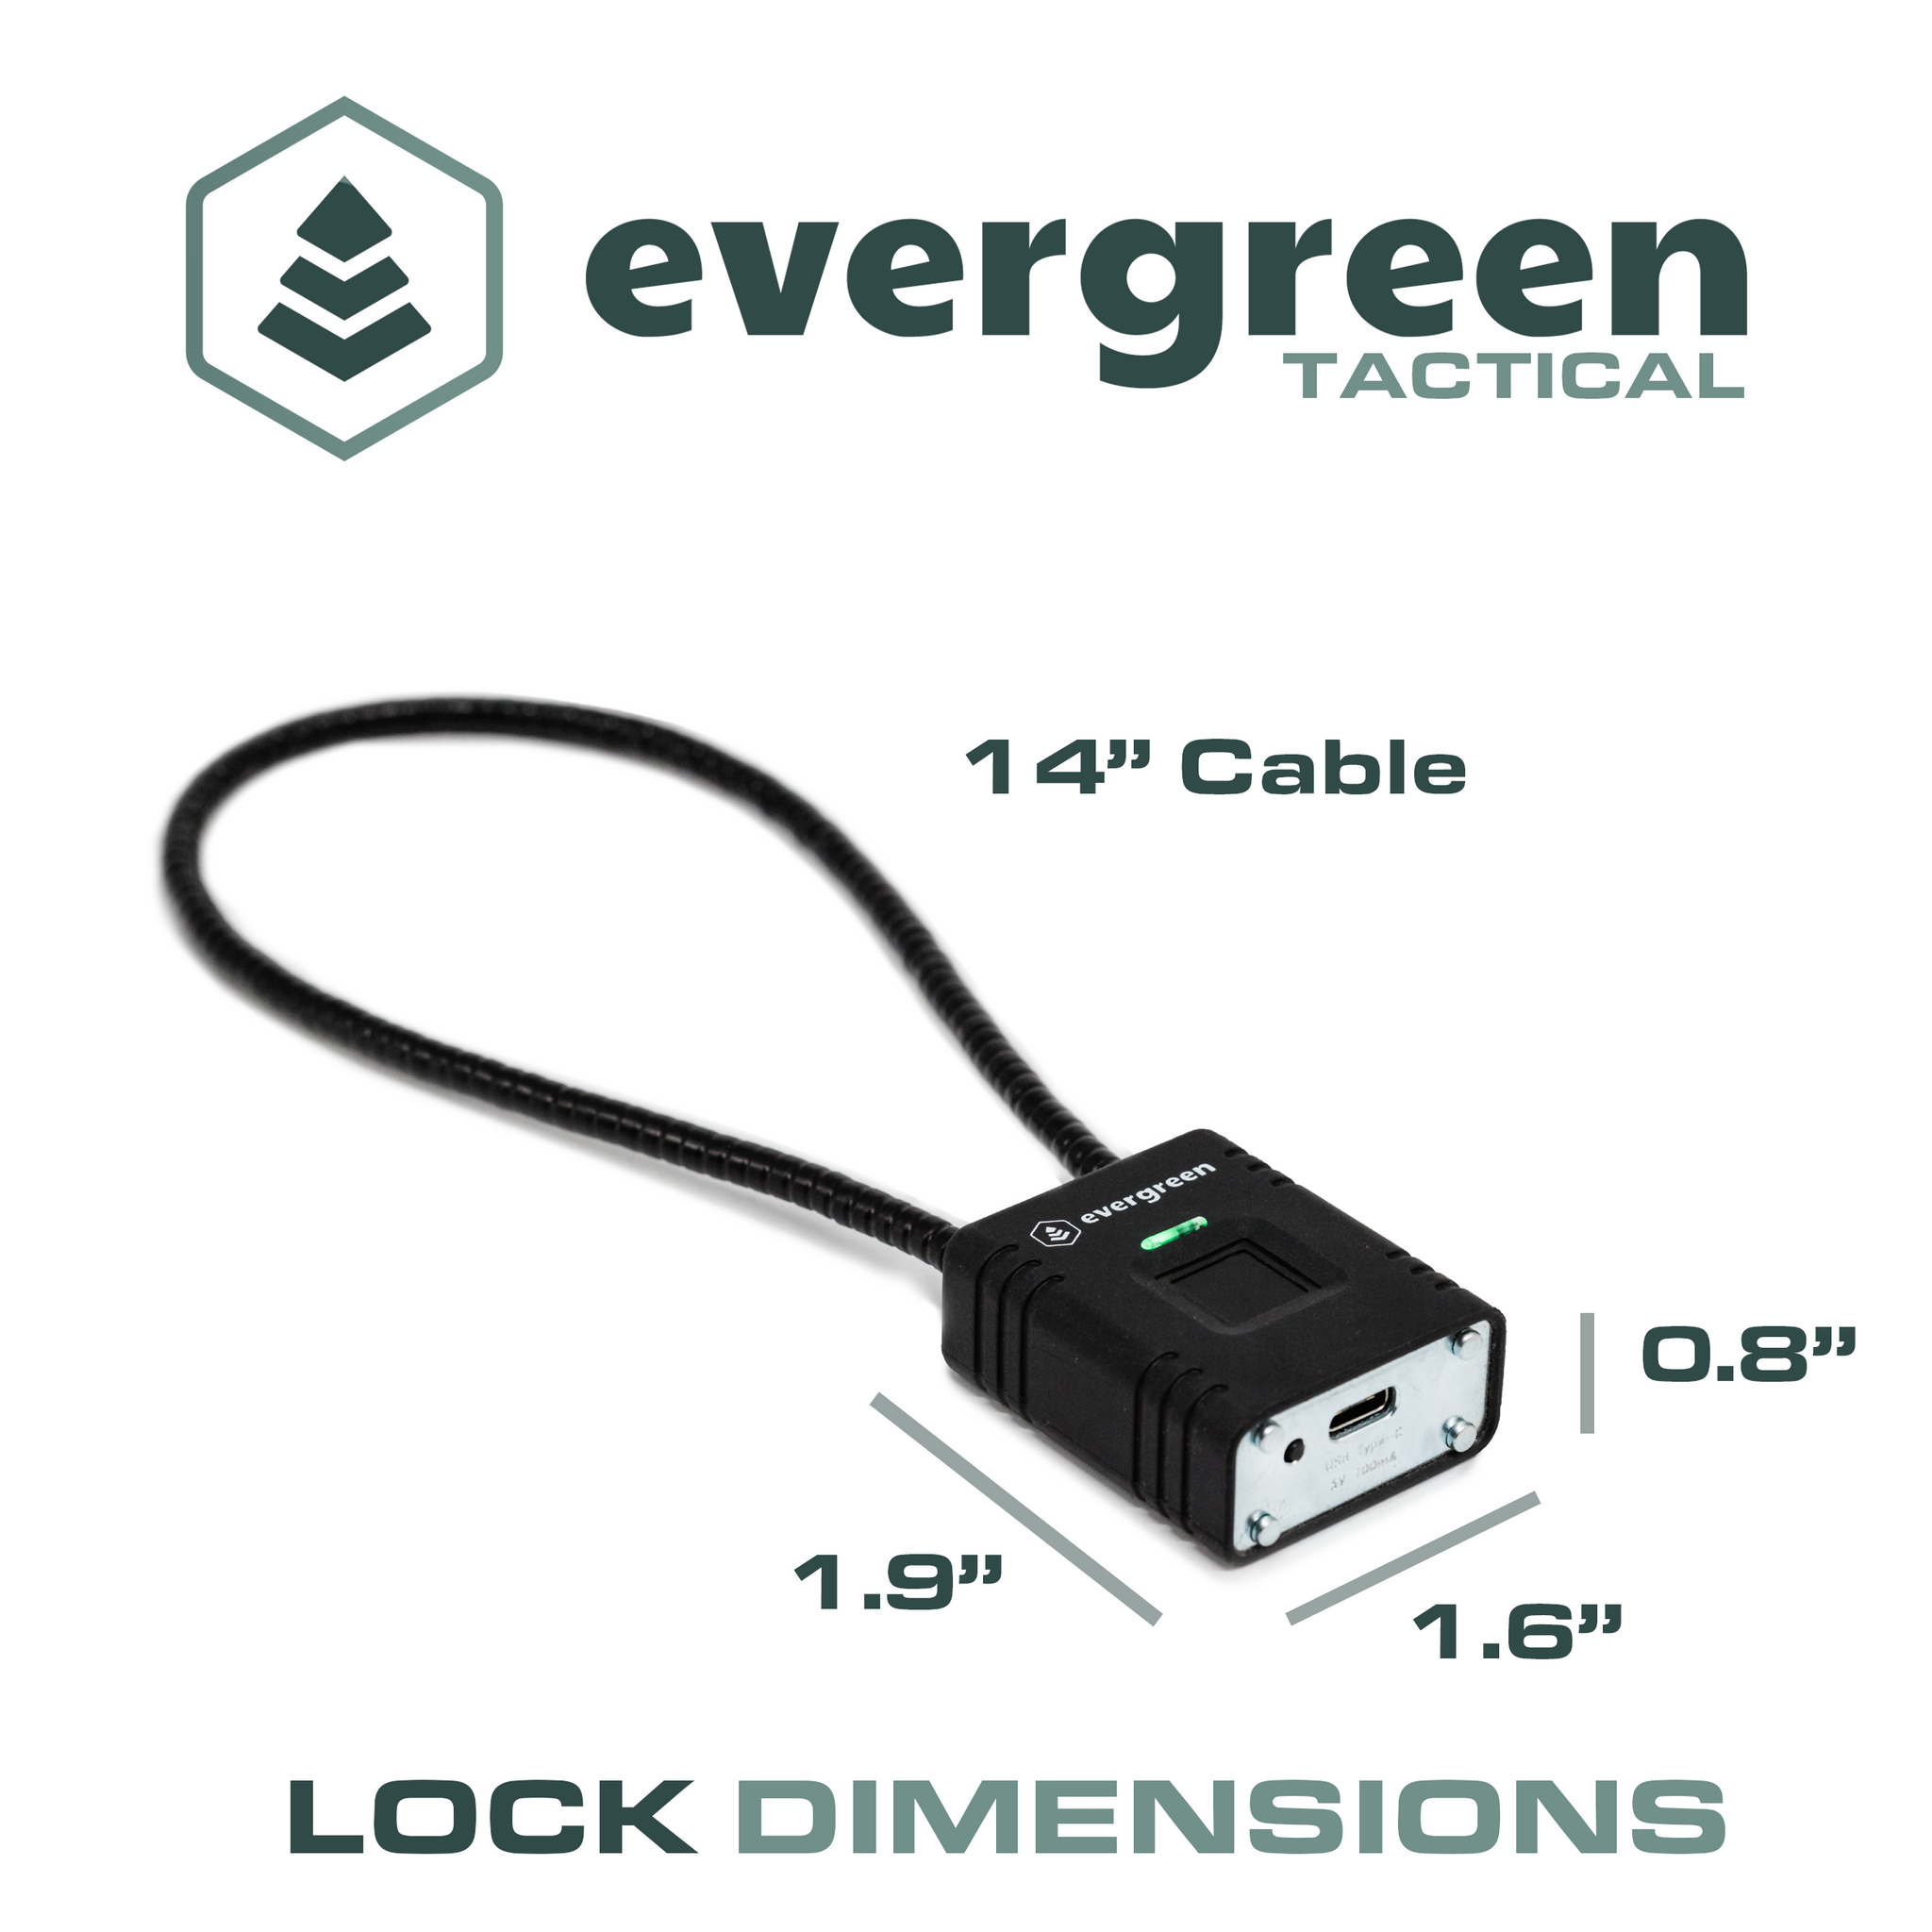 Evergreen - Biometric Cable Lock